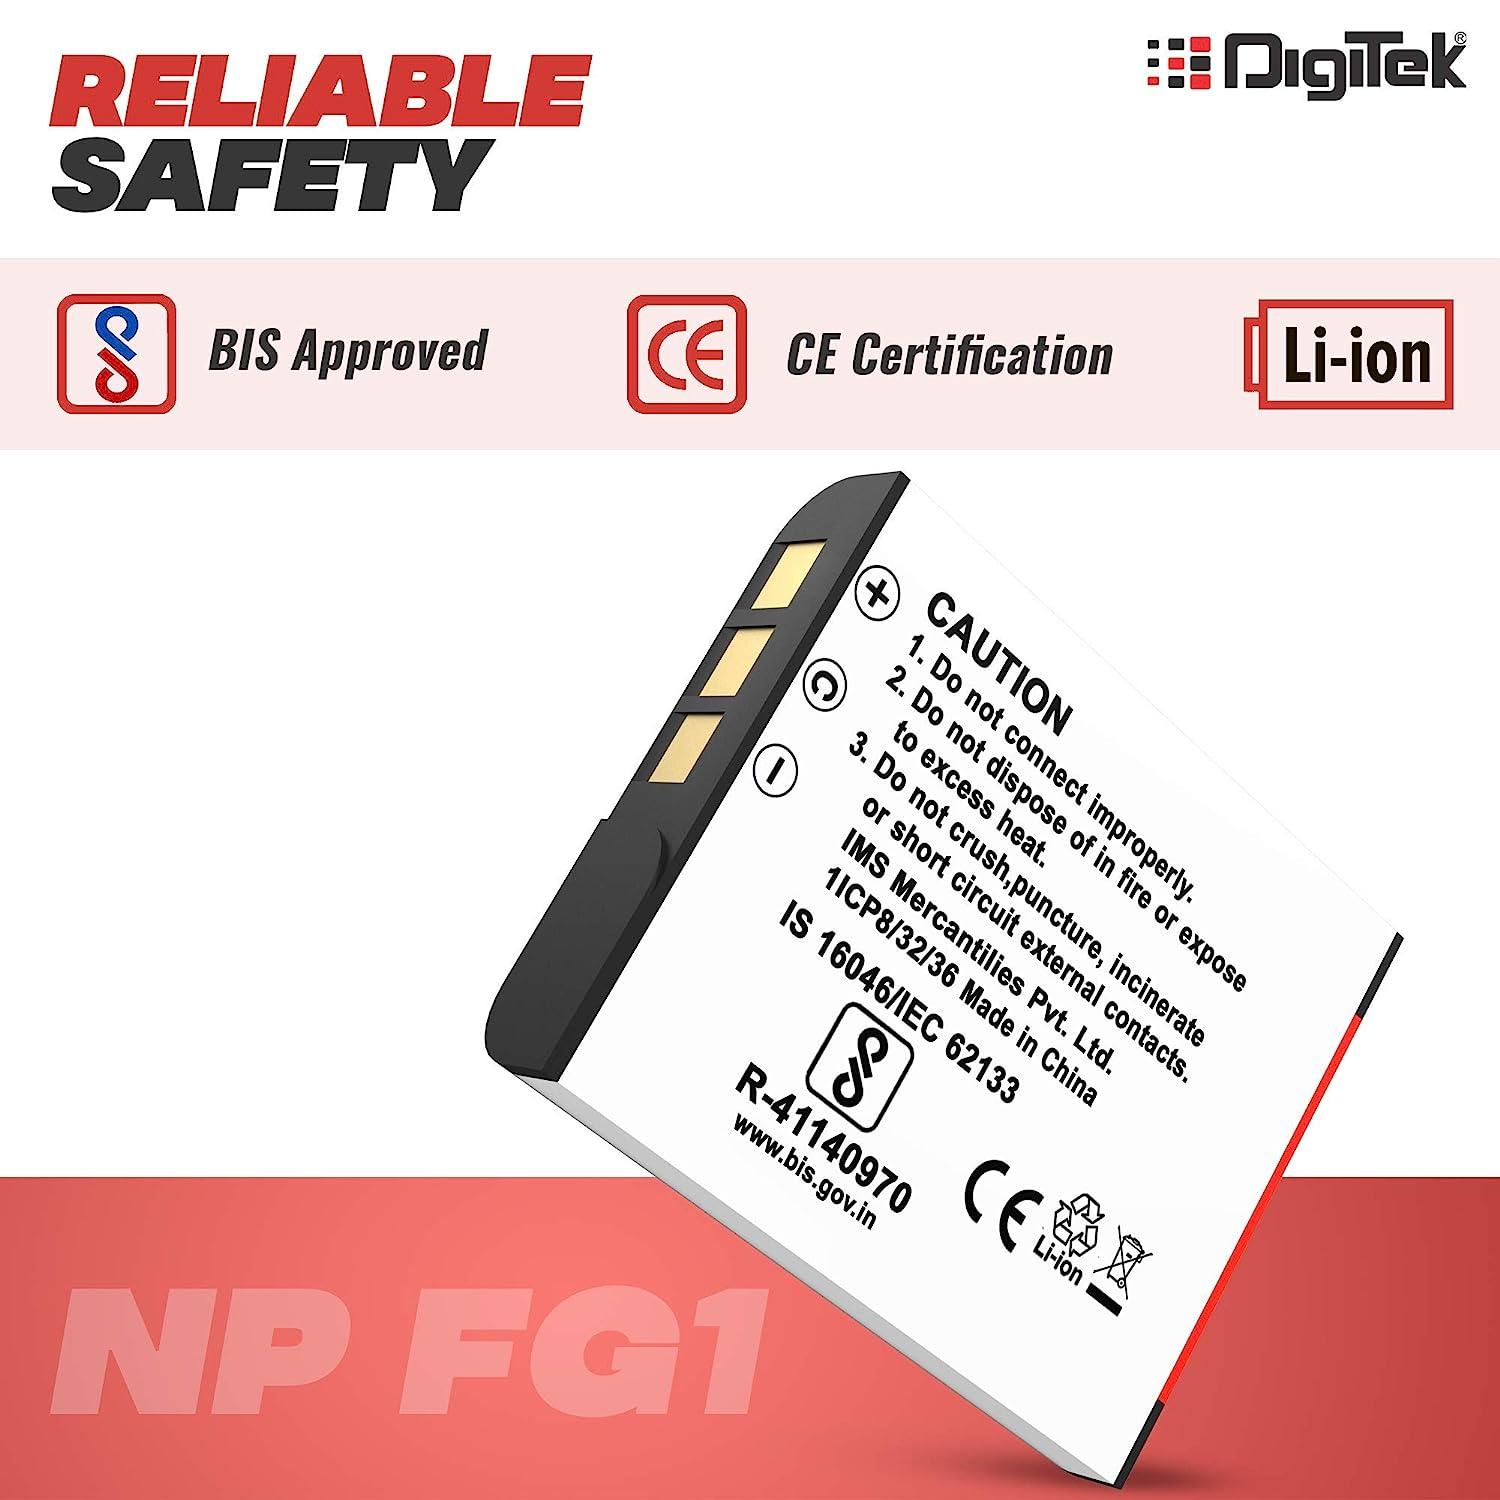 Digitek (NP-BG1) Lithium-ion Rechargeable Battery for Sony Cyber Shot Digital Camera | Compatibility - W80, W100, W130. W70, W30, and W55 - Digitek